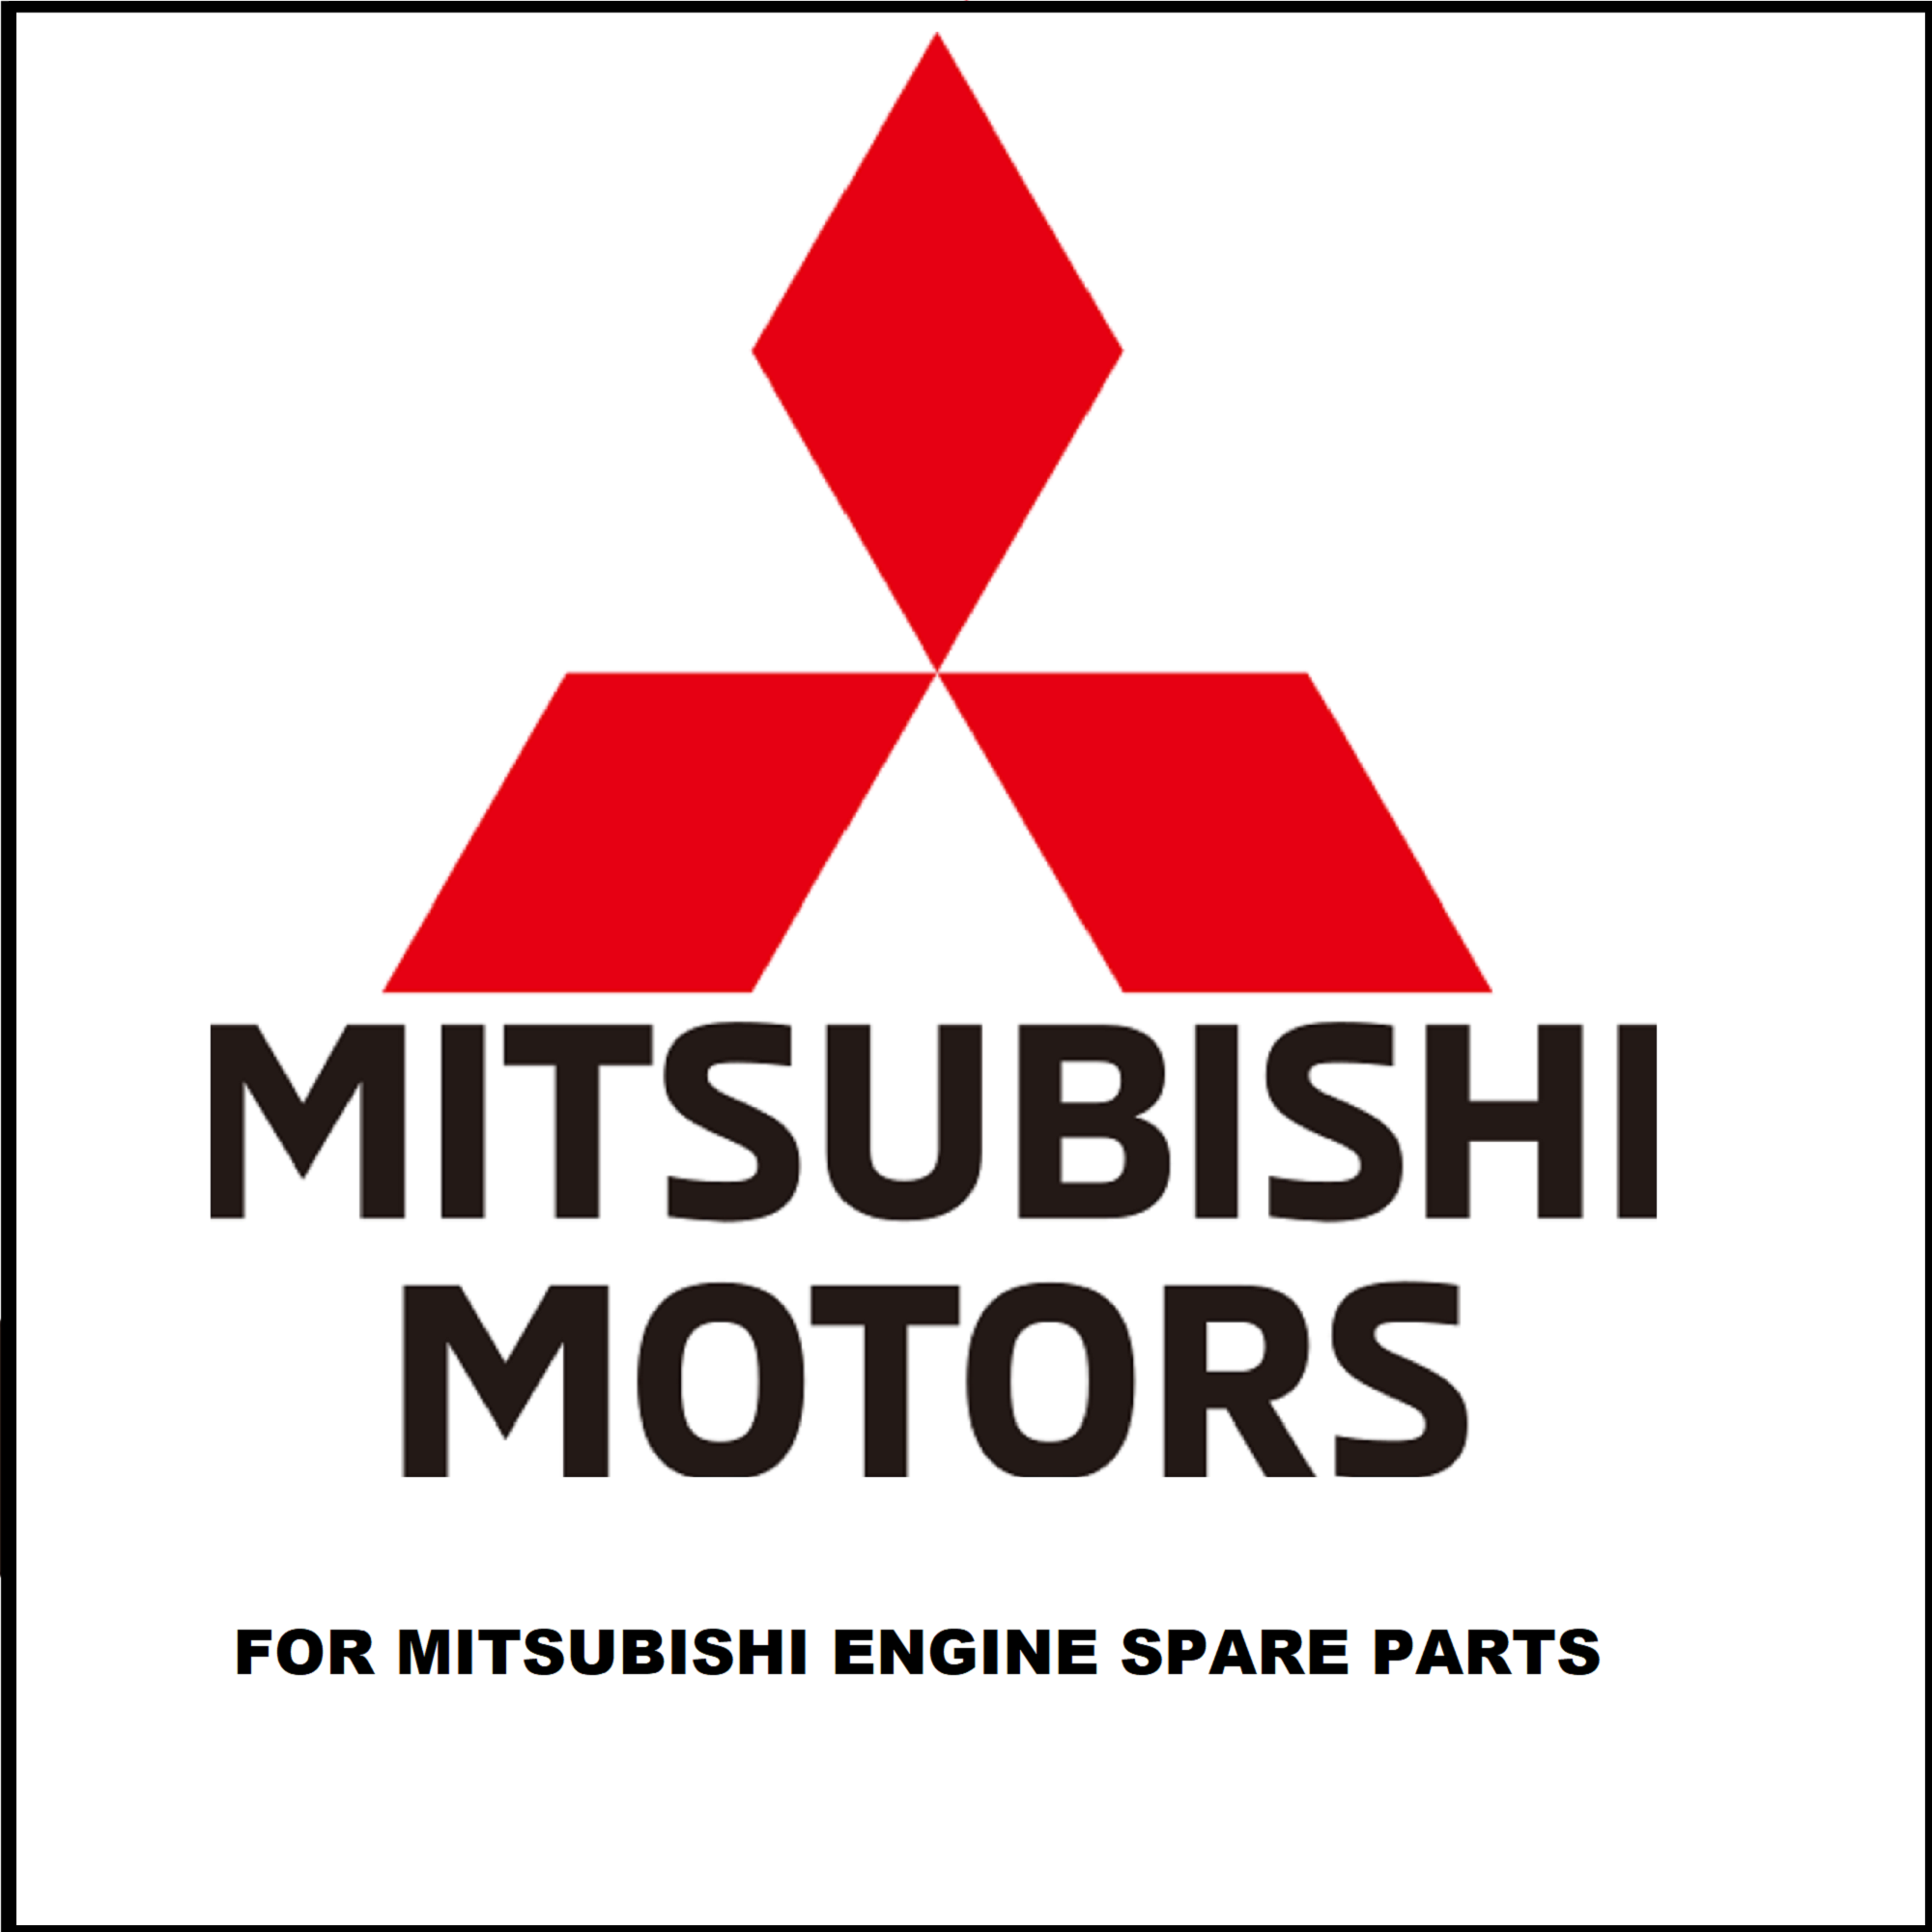 K3E-Mitsubishi Motors, Spare Parts